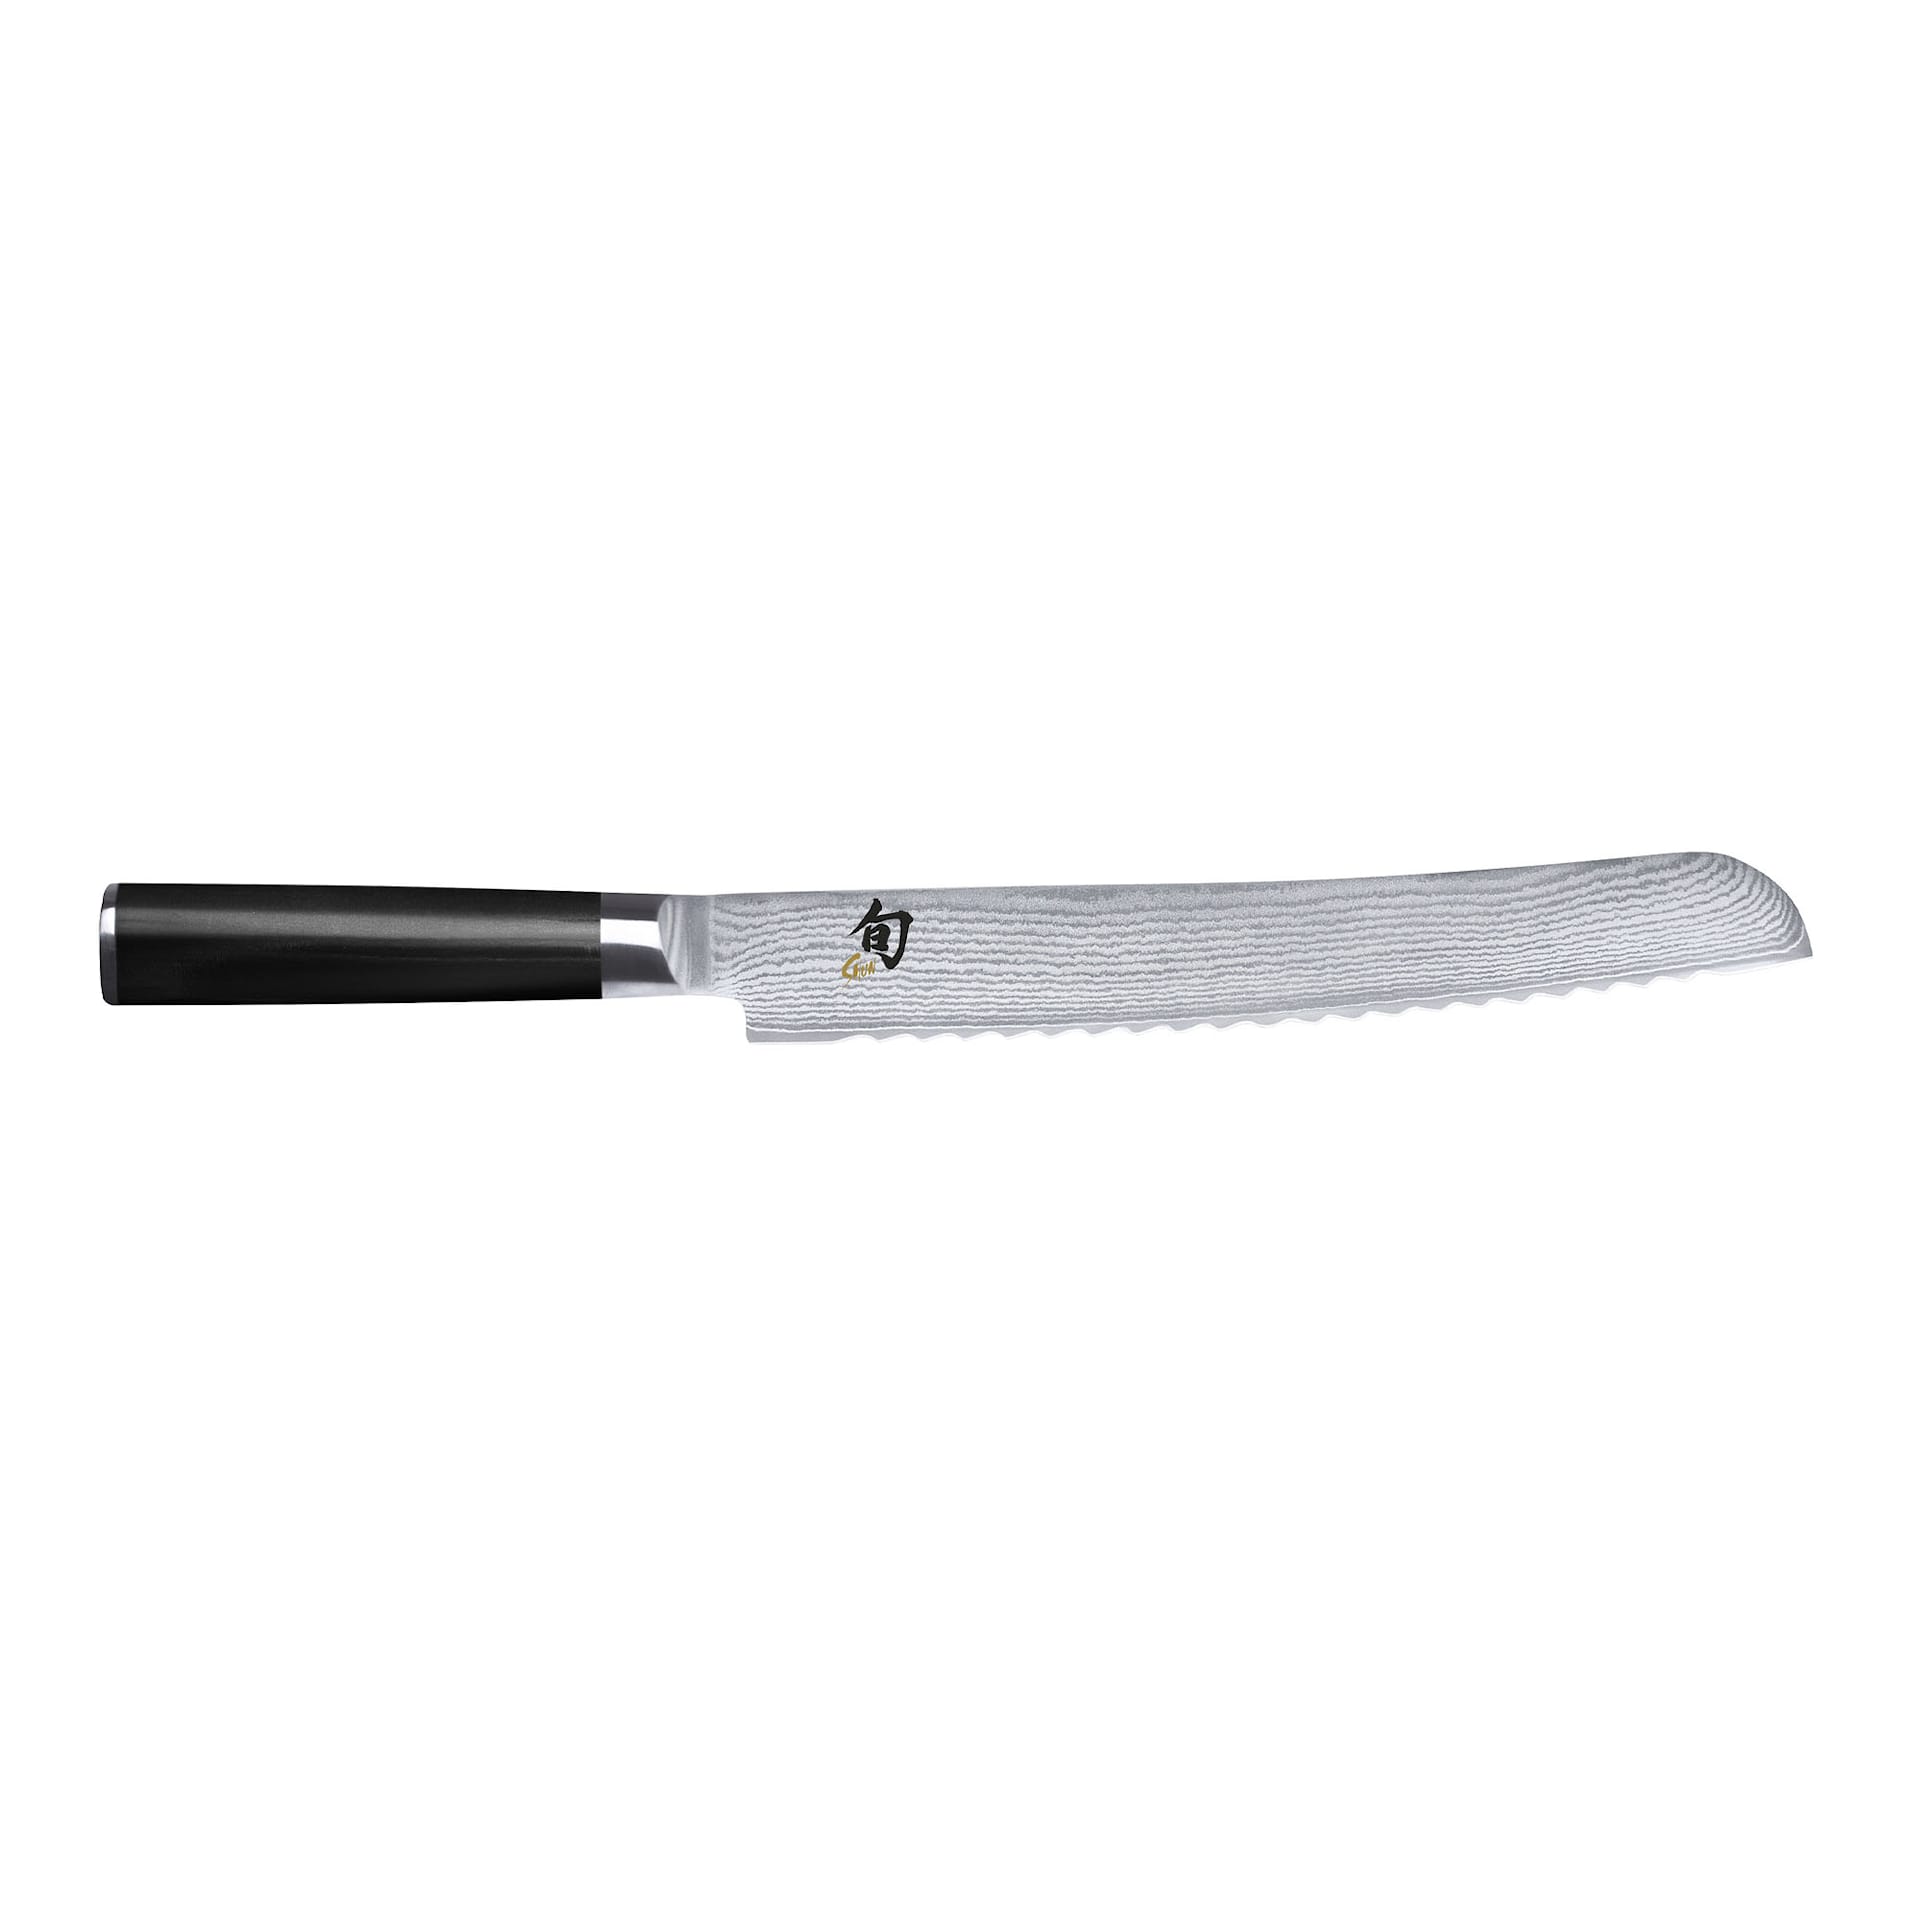 SHUN CLASSIC Bread knife 23 cm Black handle - KAI - NO GA